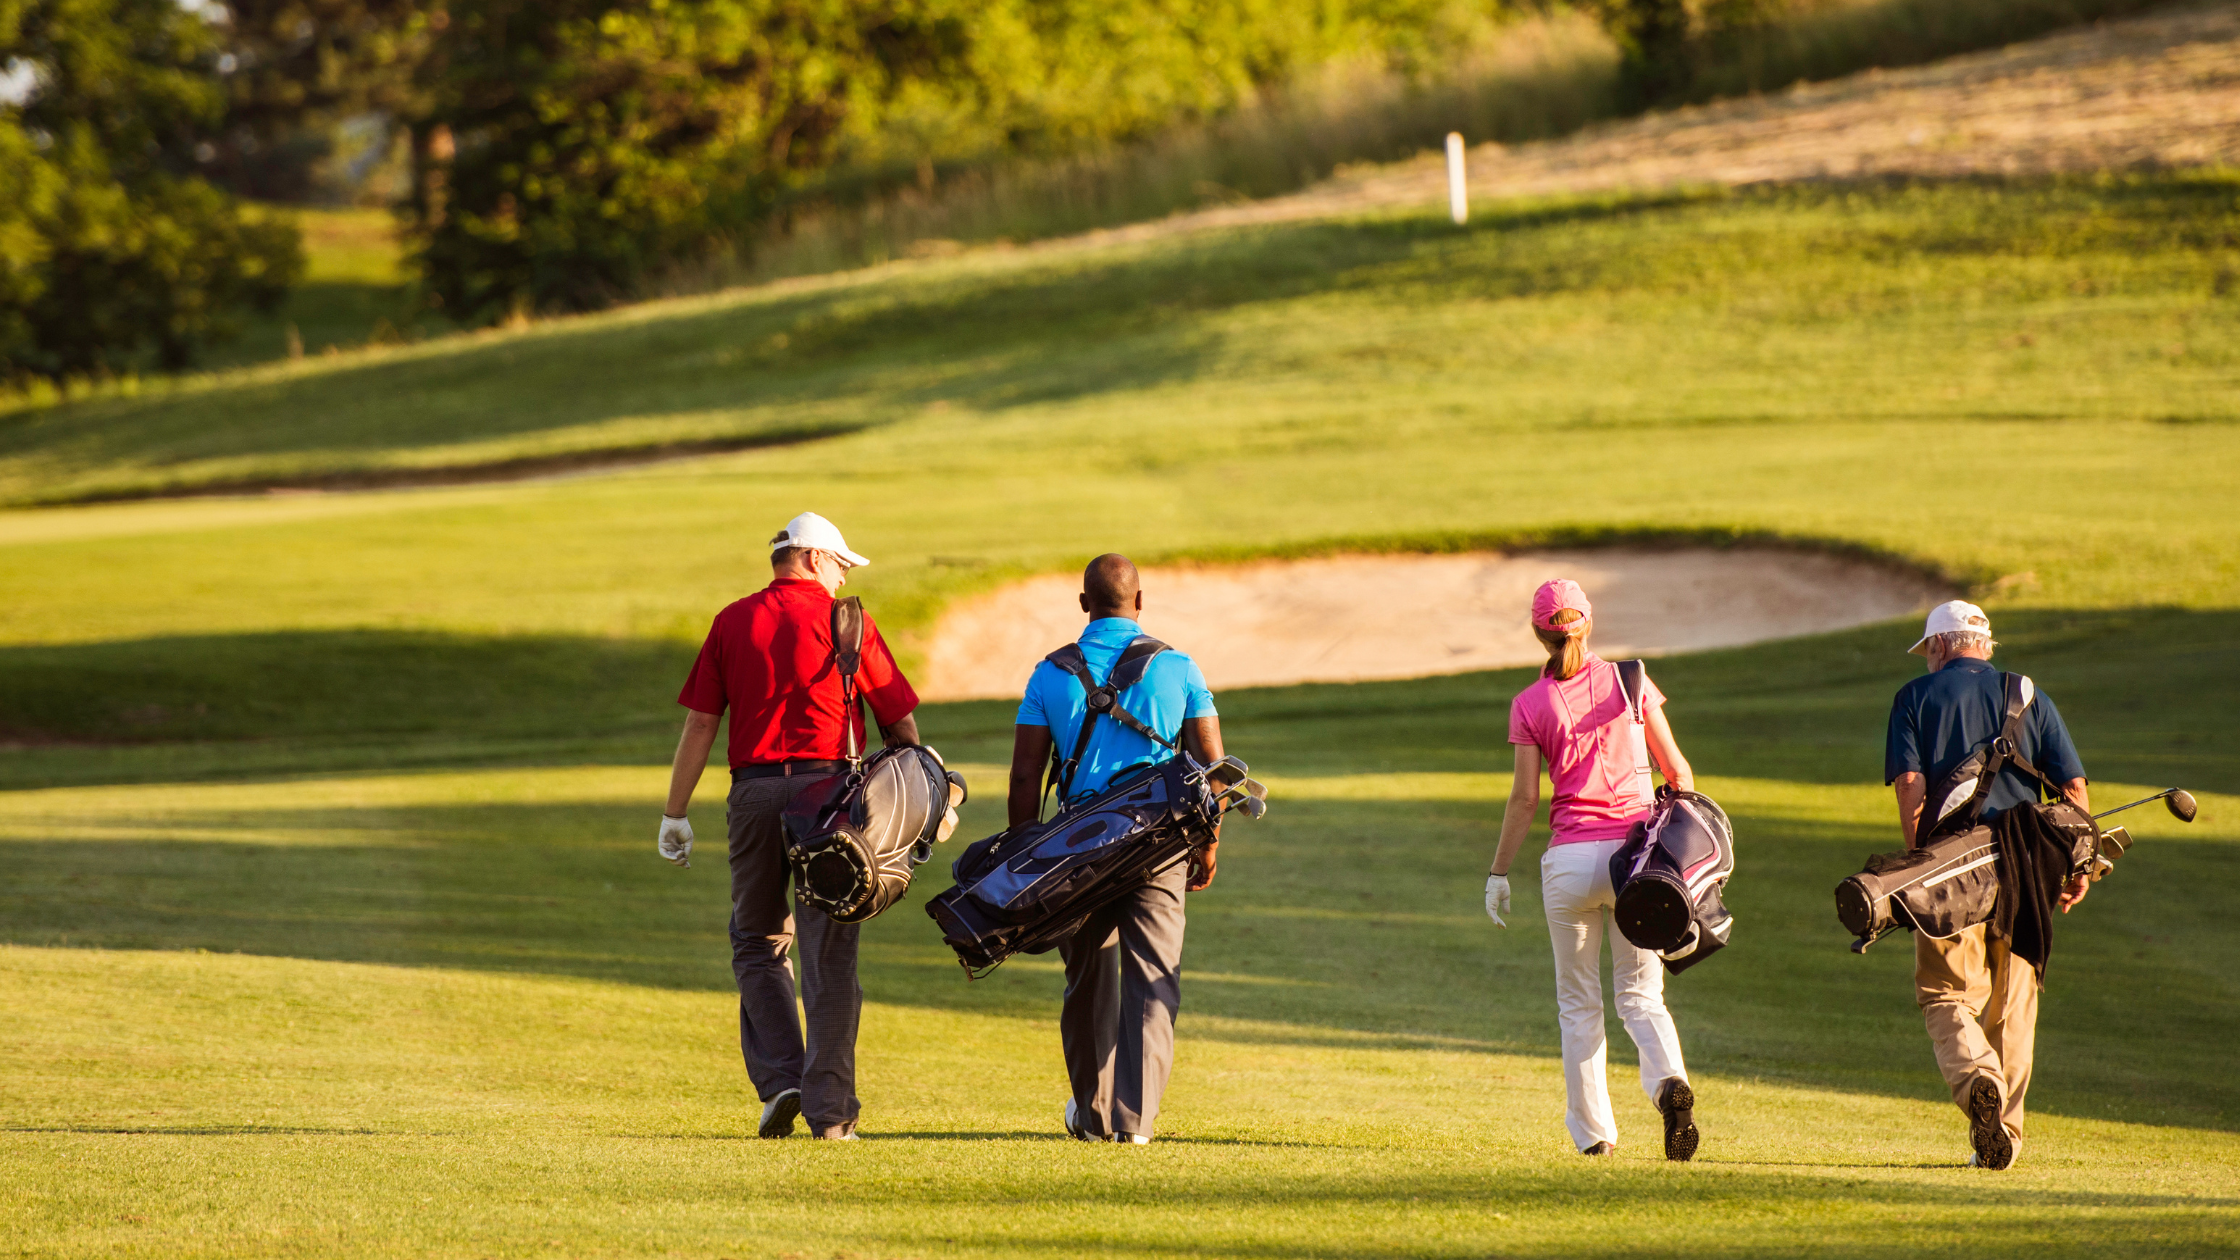 Golfers walking on a golf course